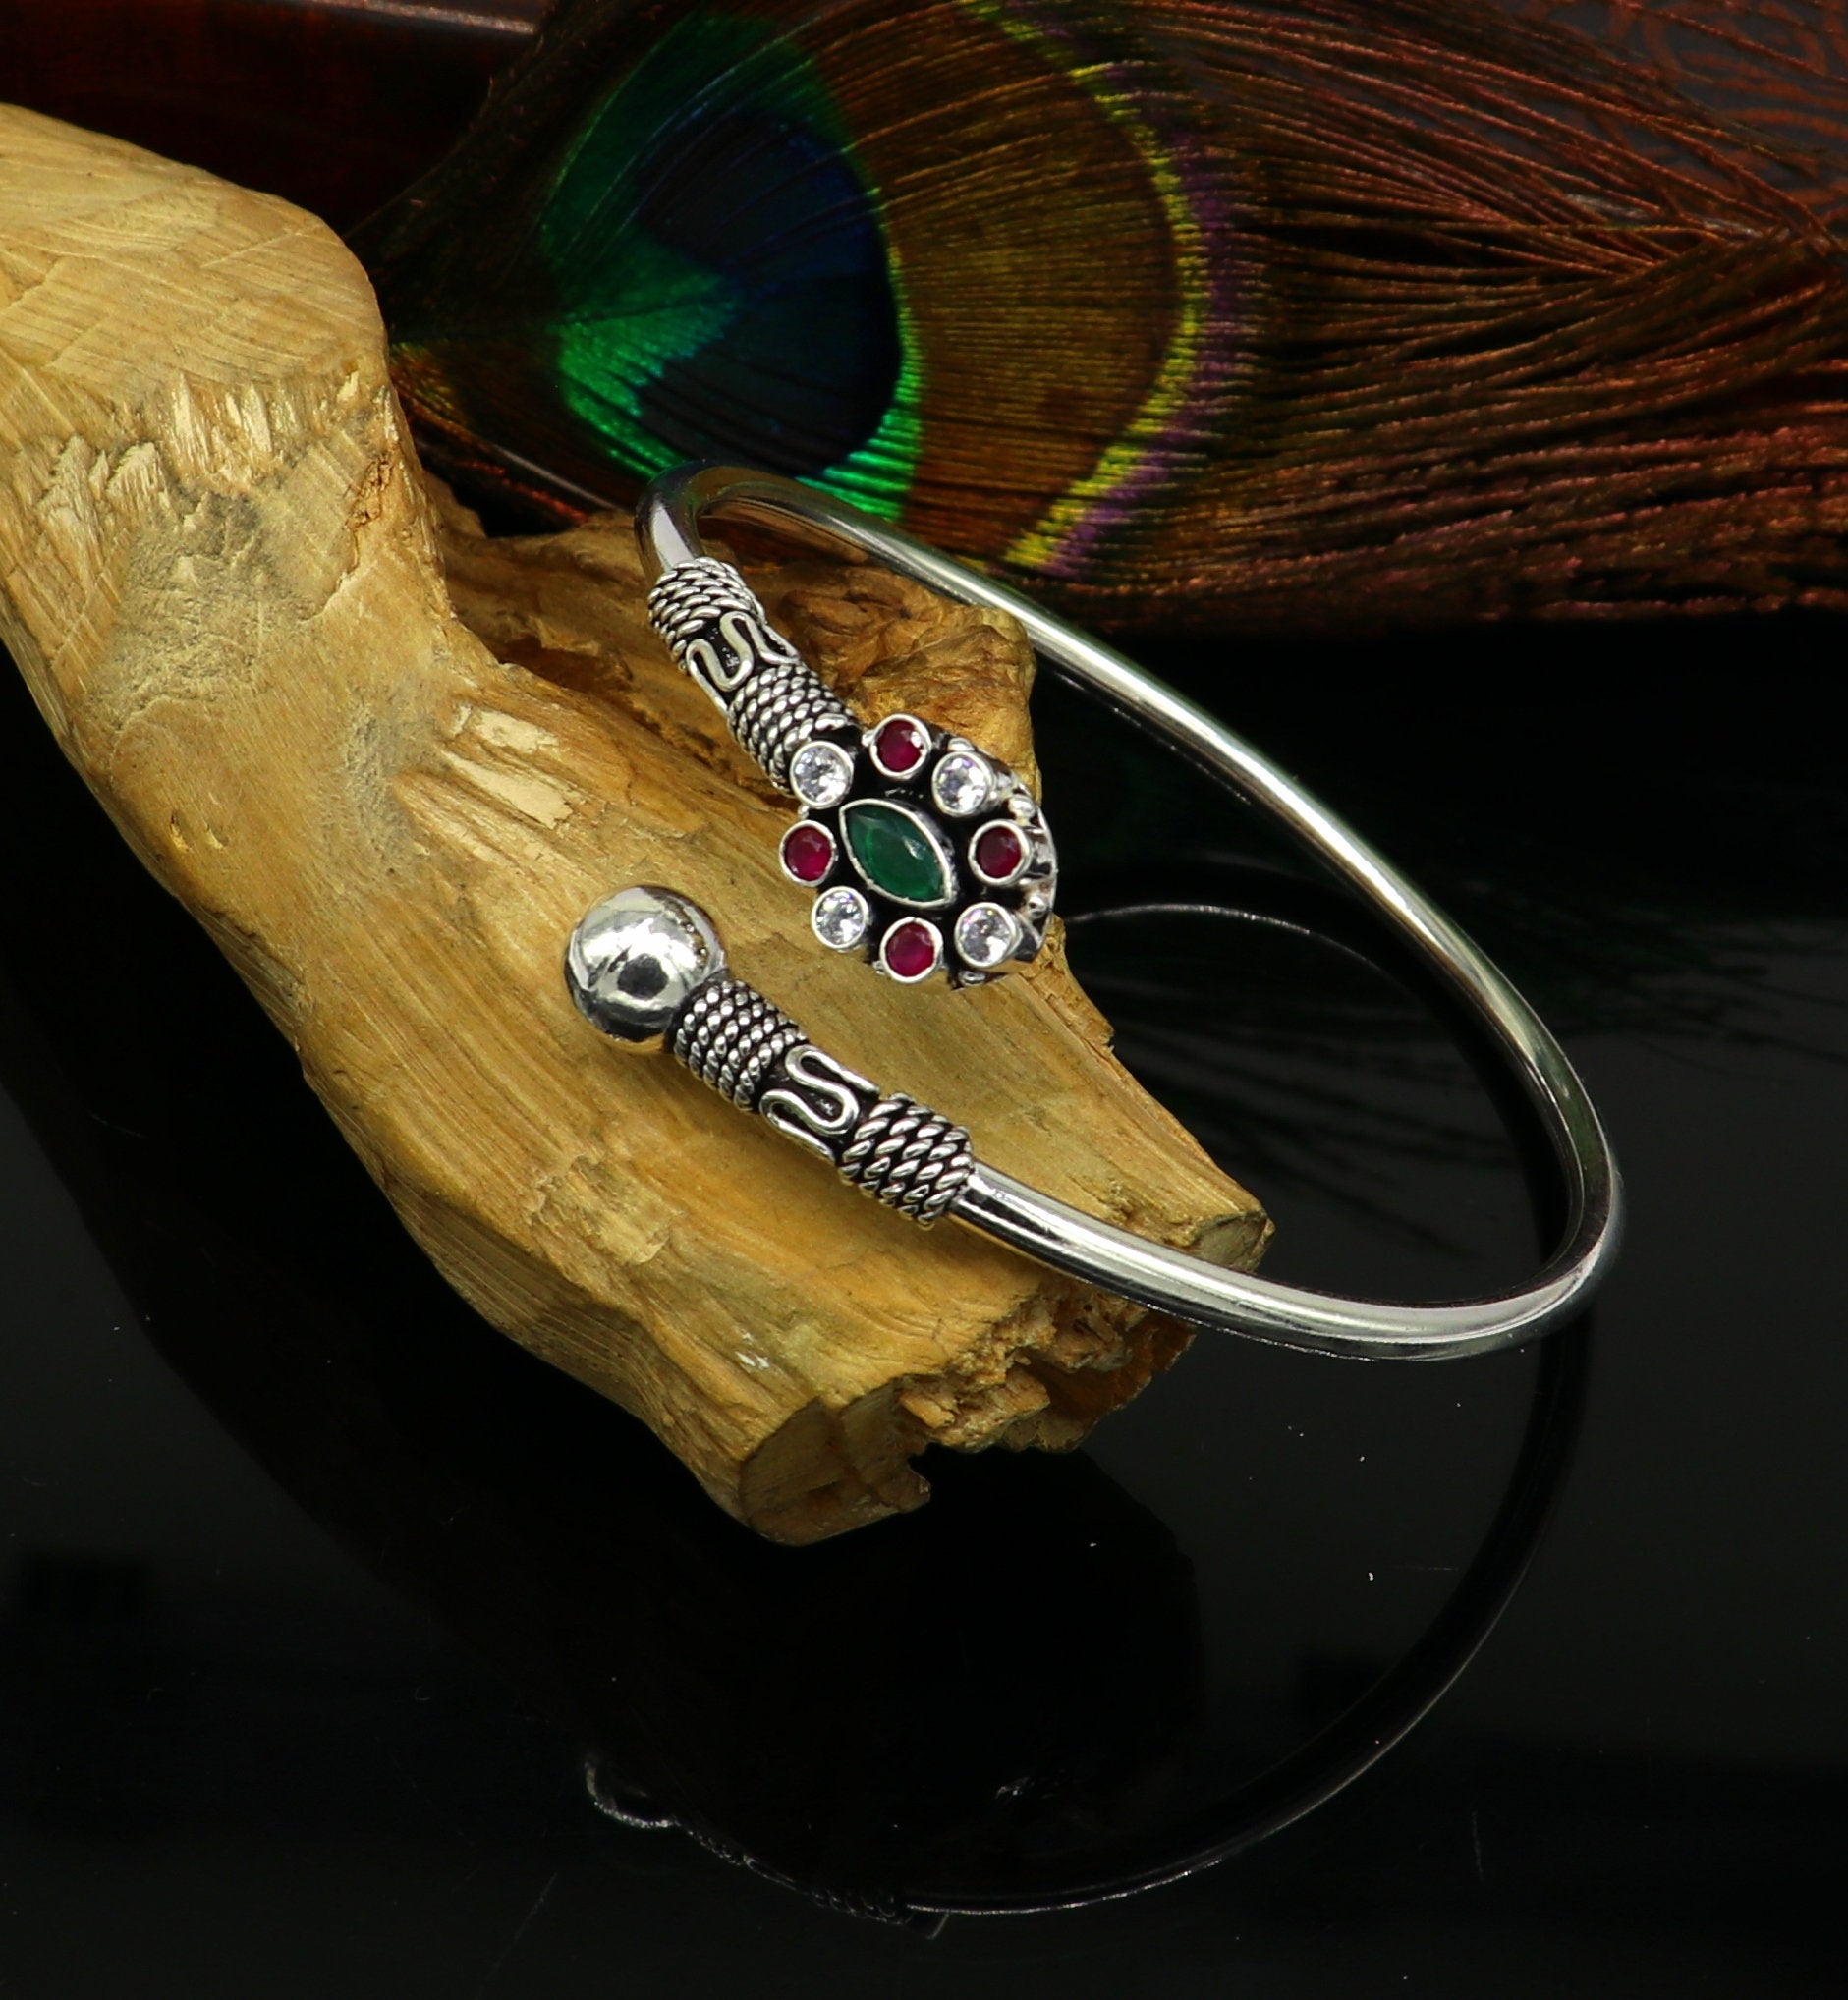 Customized design 925 sterling silver handcrafted design bangle bracelet kada, Vintage fancy stylish oxidized tribal jewelry nssk279 - TRIBAL ORNAMENTS